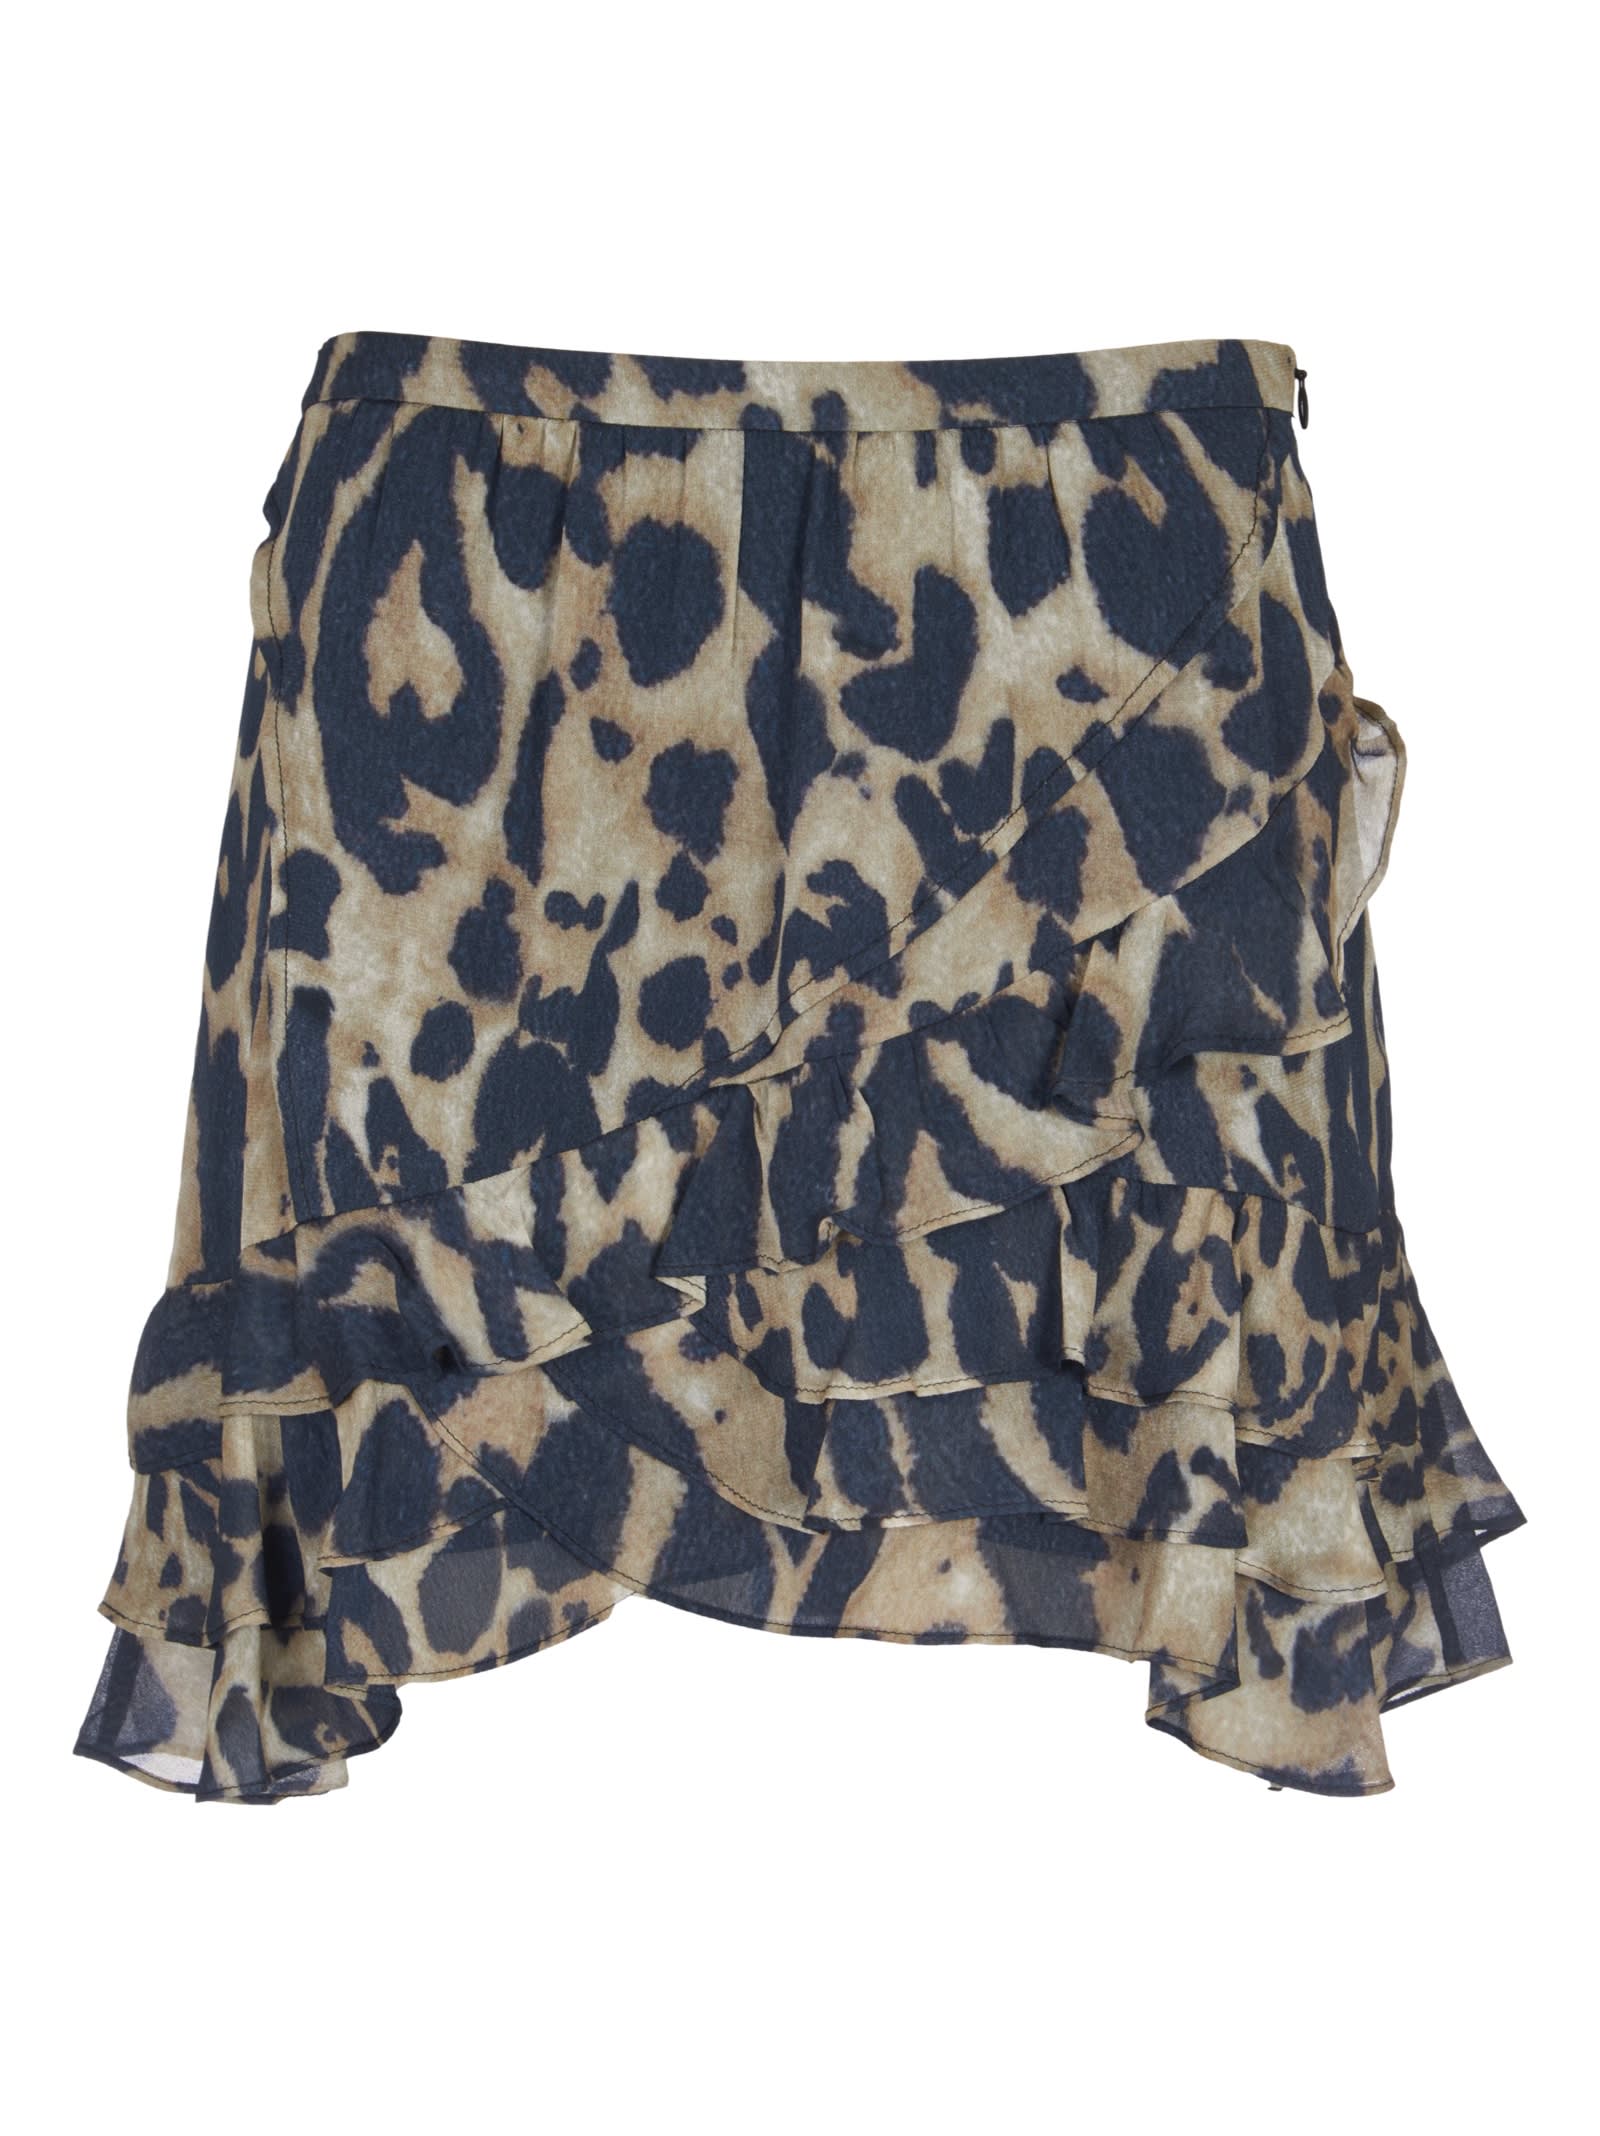 Ruffle Leopard Print Skirt